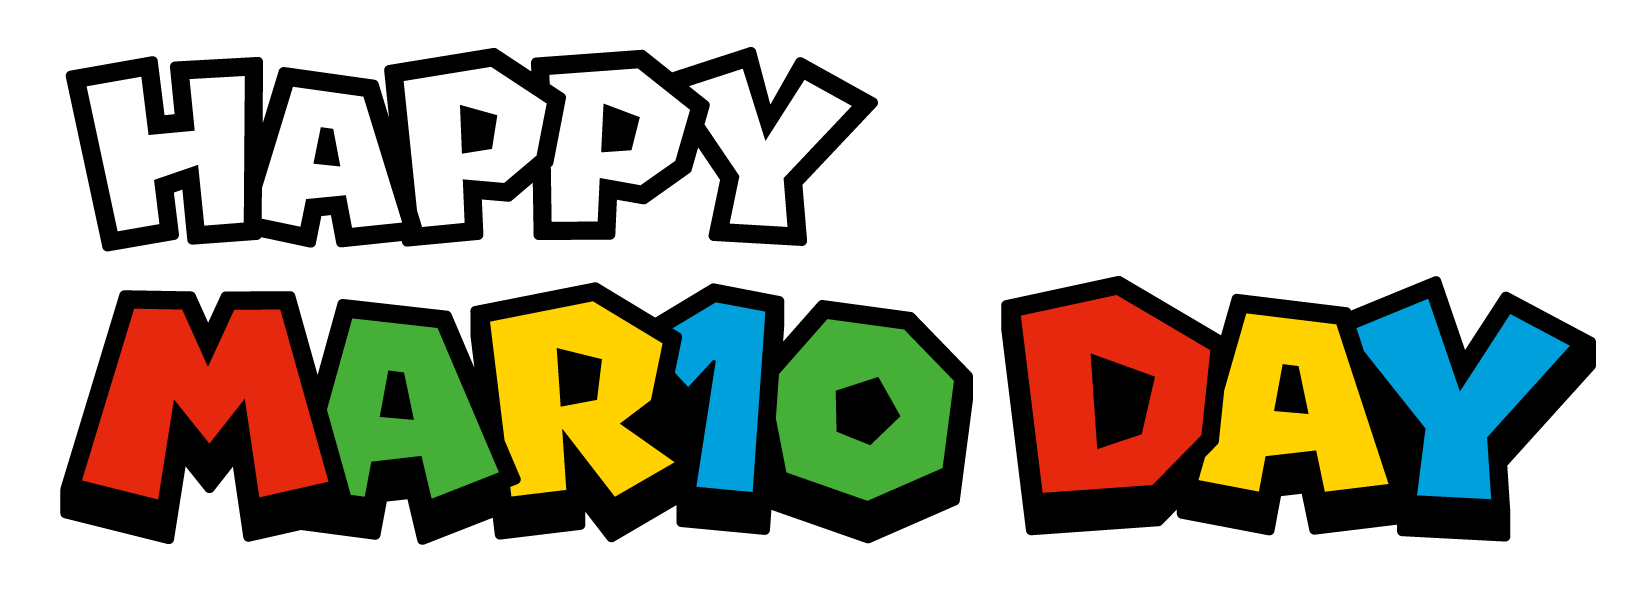 Mario day. Марио логотип. День Марио (mar10 Day). Хэппи Марио дей. Супер Марио надпись.